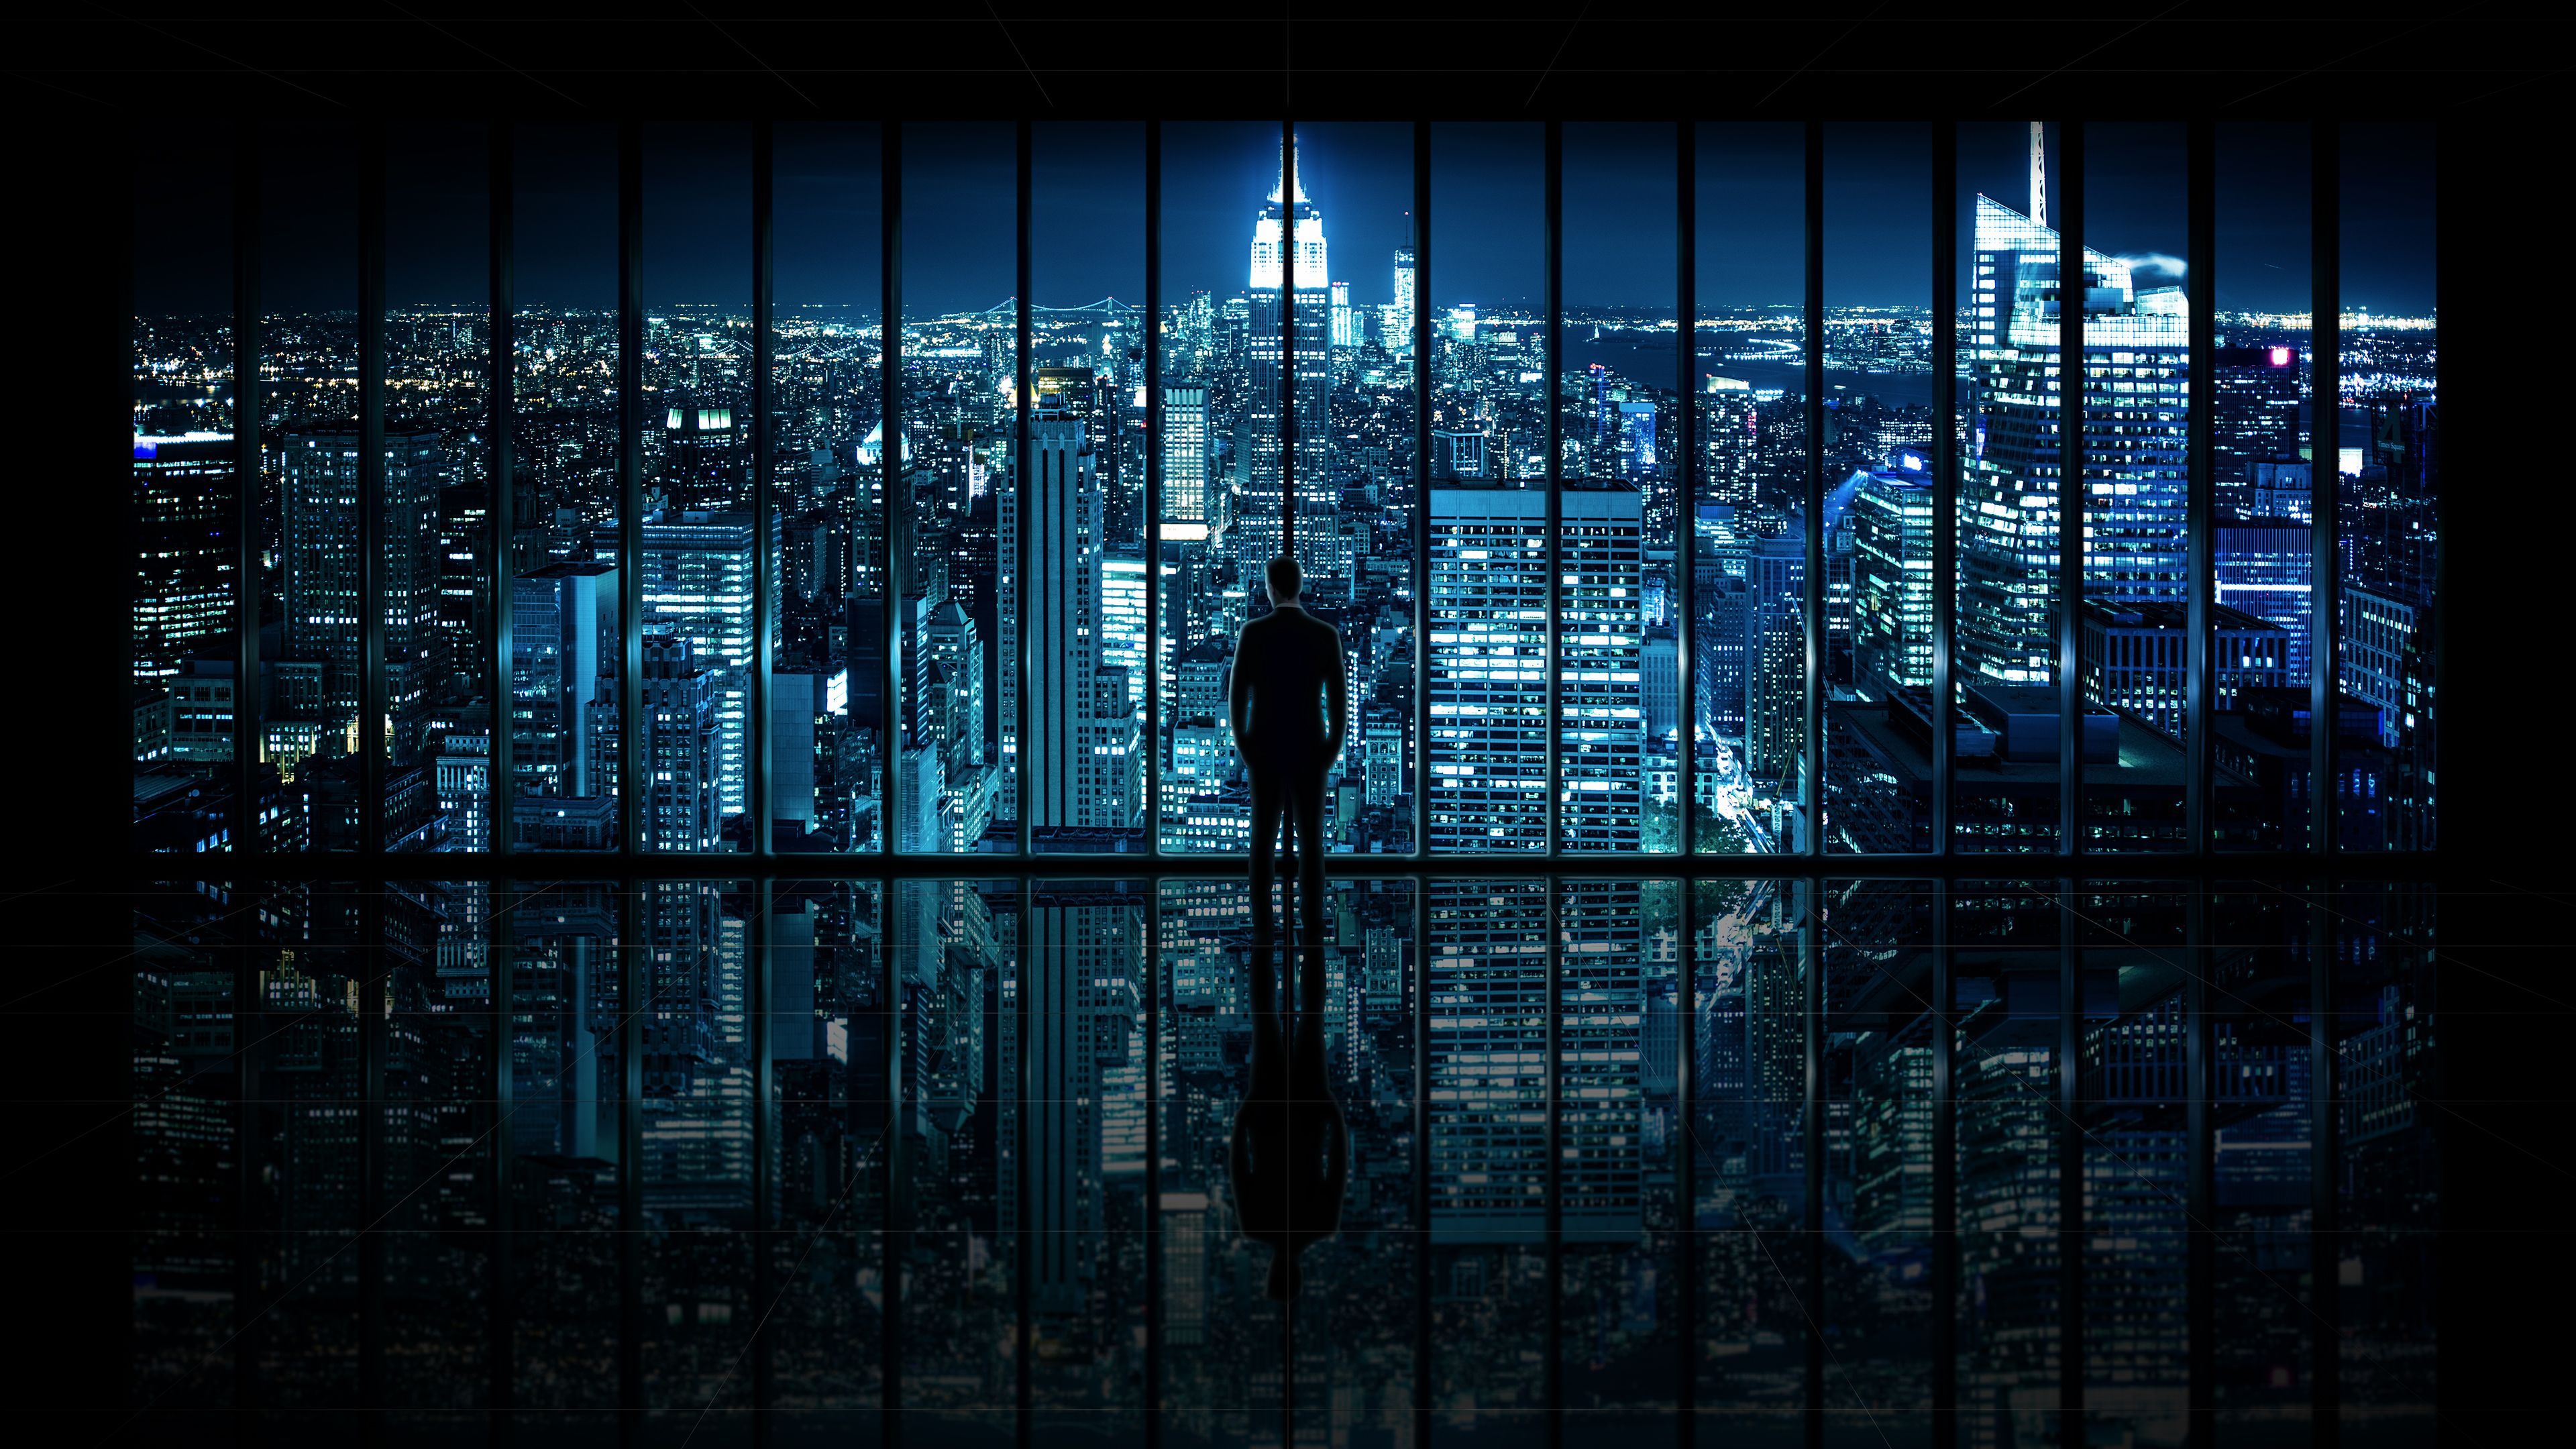 Commissioner Gordon Gotham Season 4 Wallpapers